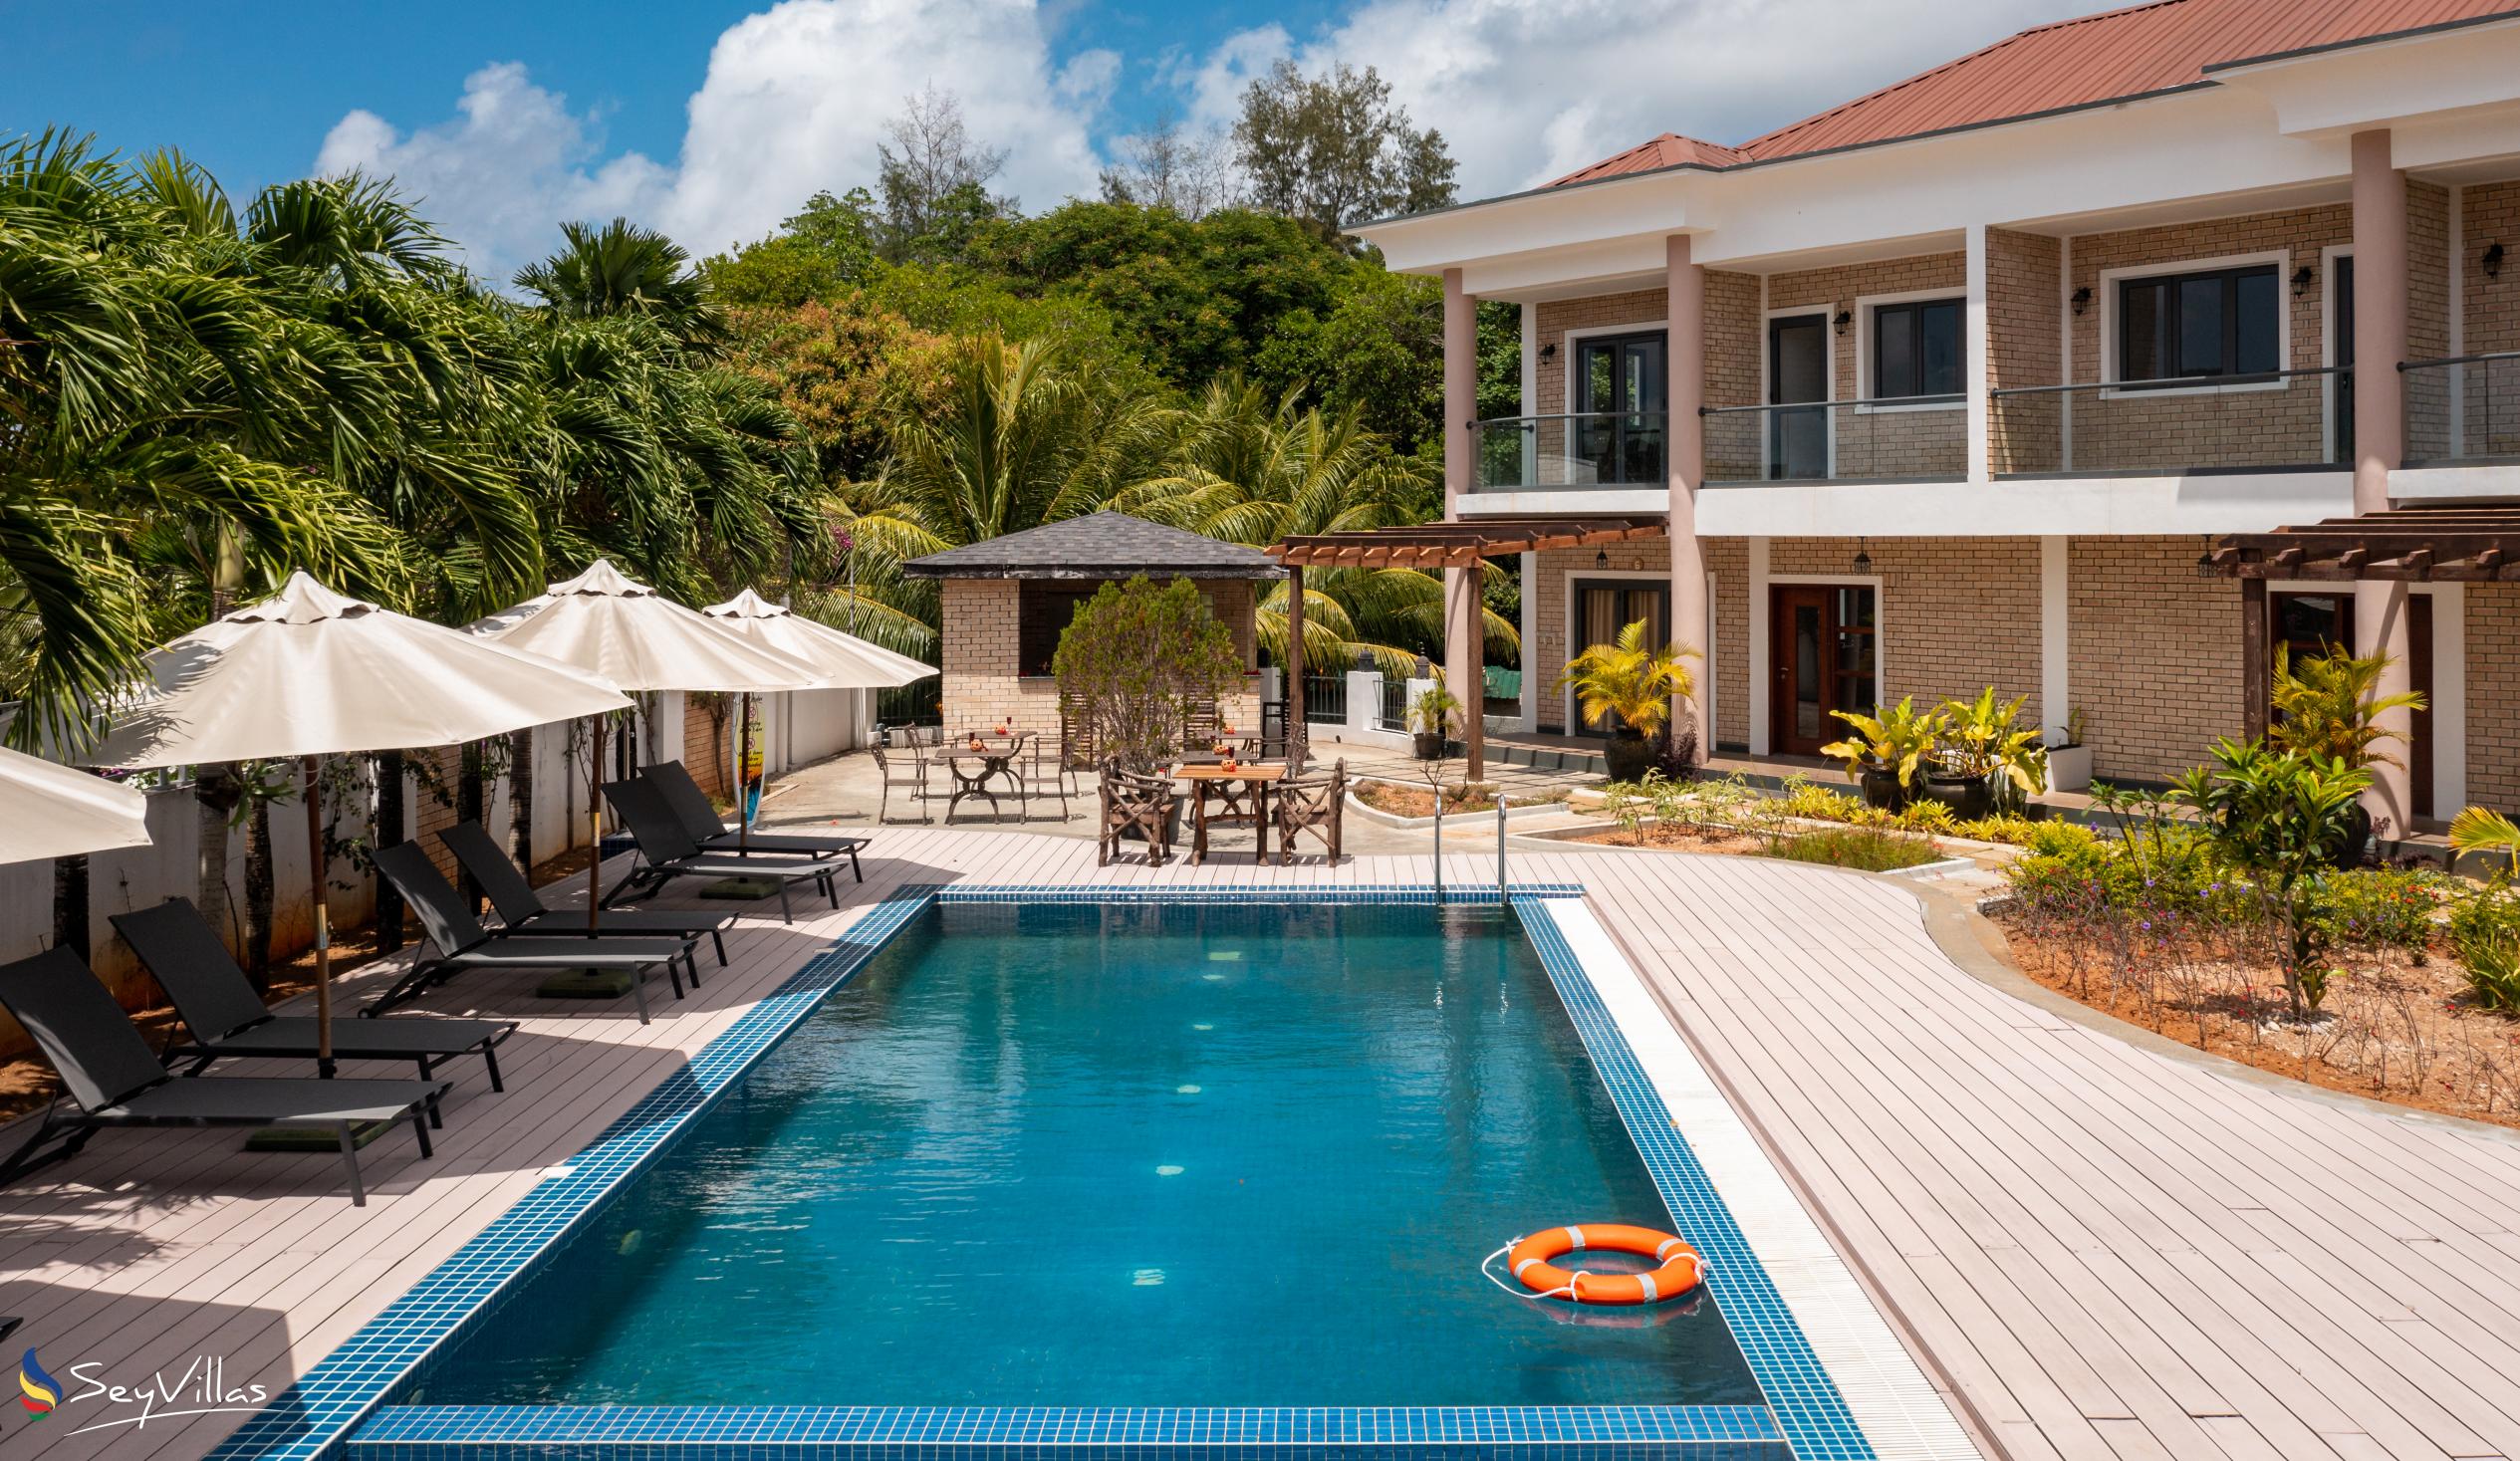 Photo 1: Isla Holiday Home - Outdoor area - Mahé (Seychelles)